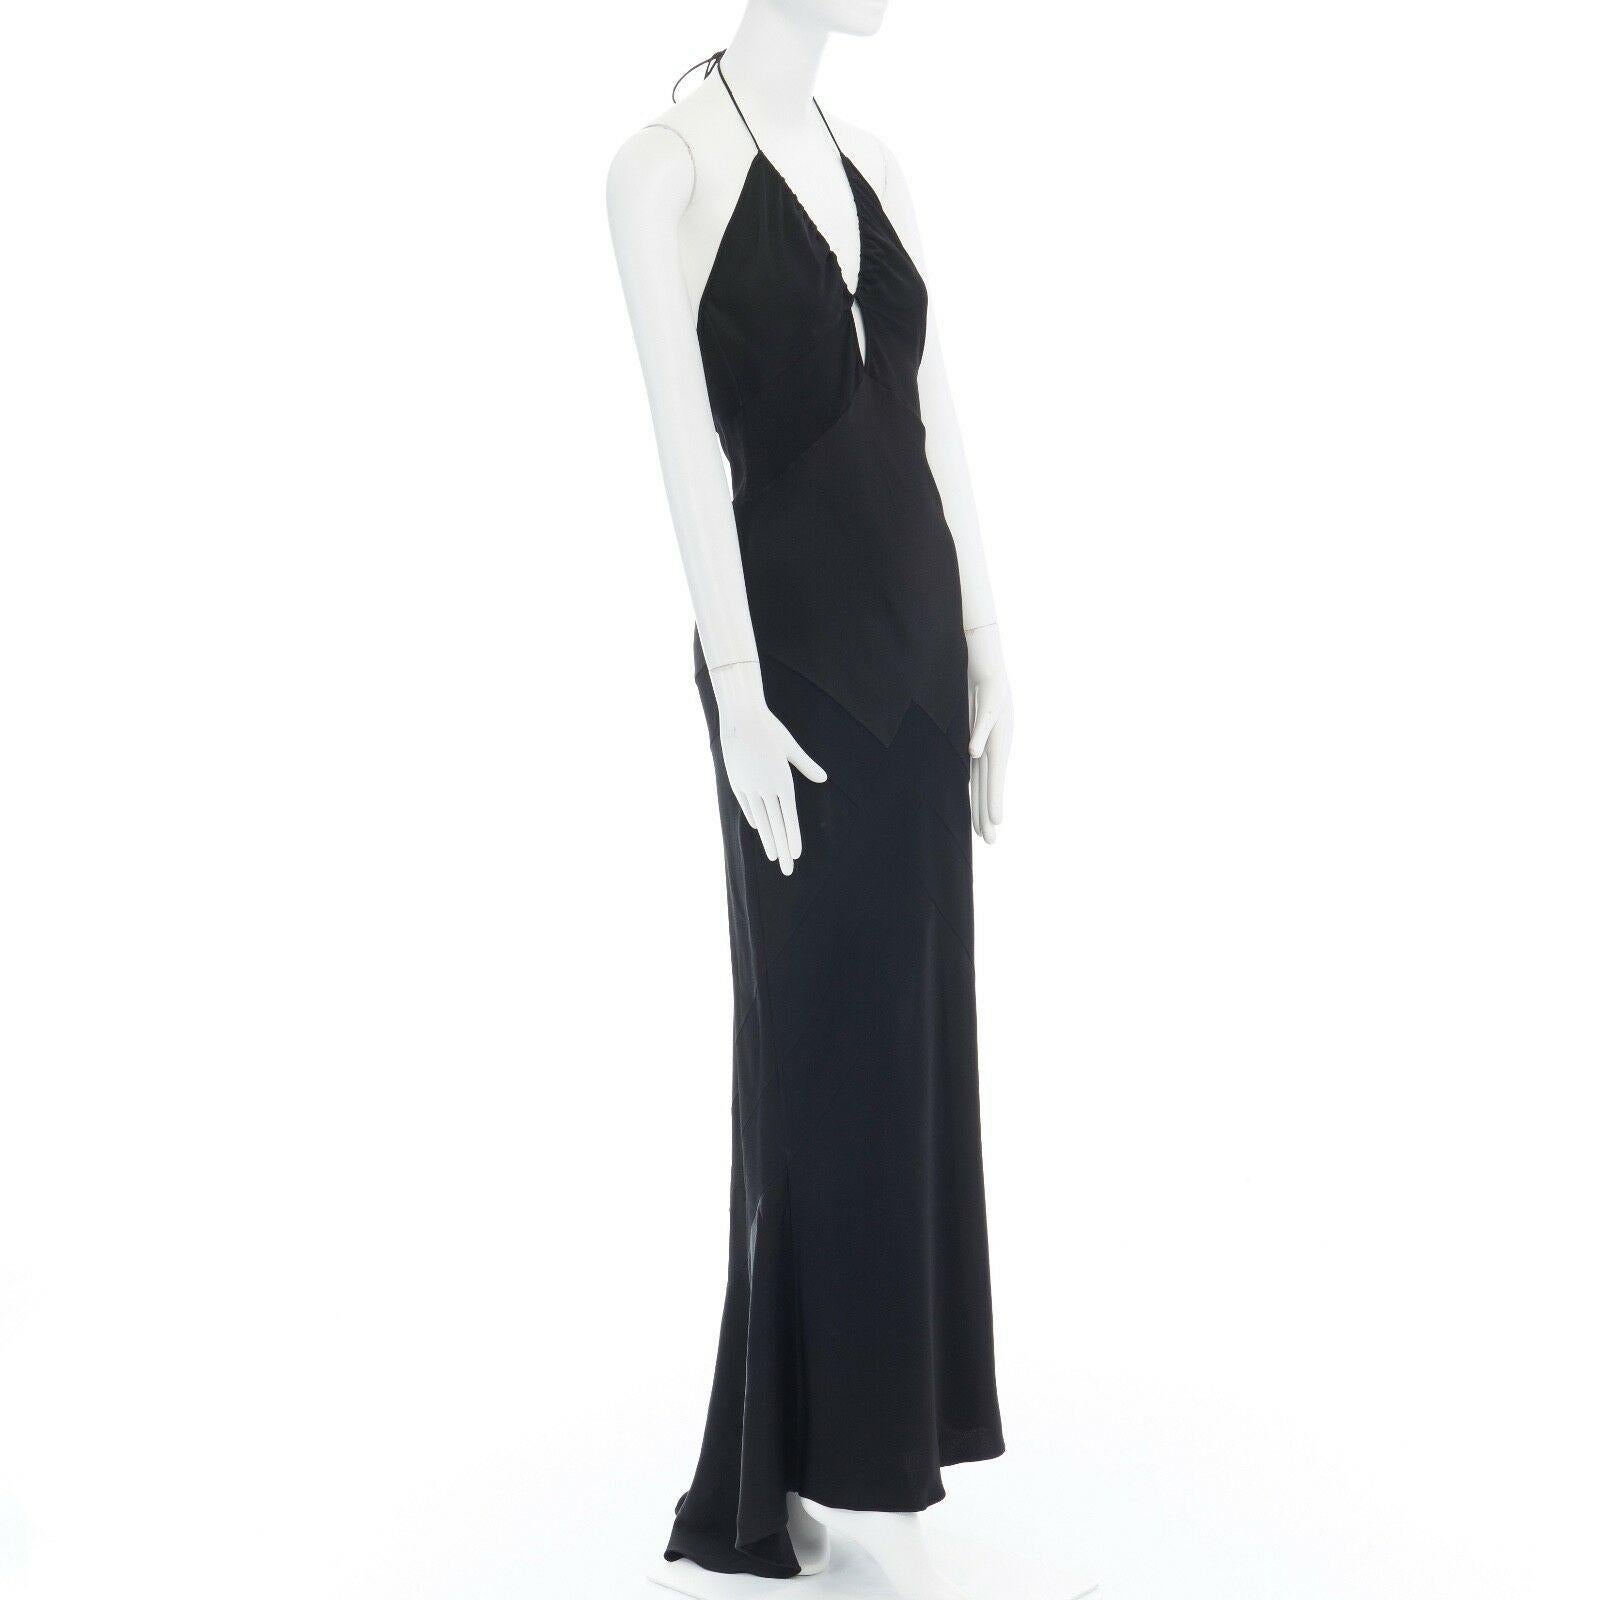 Black CHRISTIAN DIOR GALLIANO black halter keyhole backless dress gown FR40 US8 UK12 L